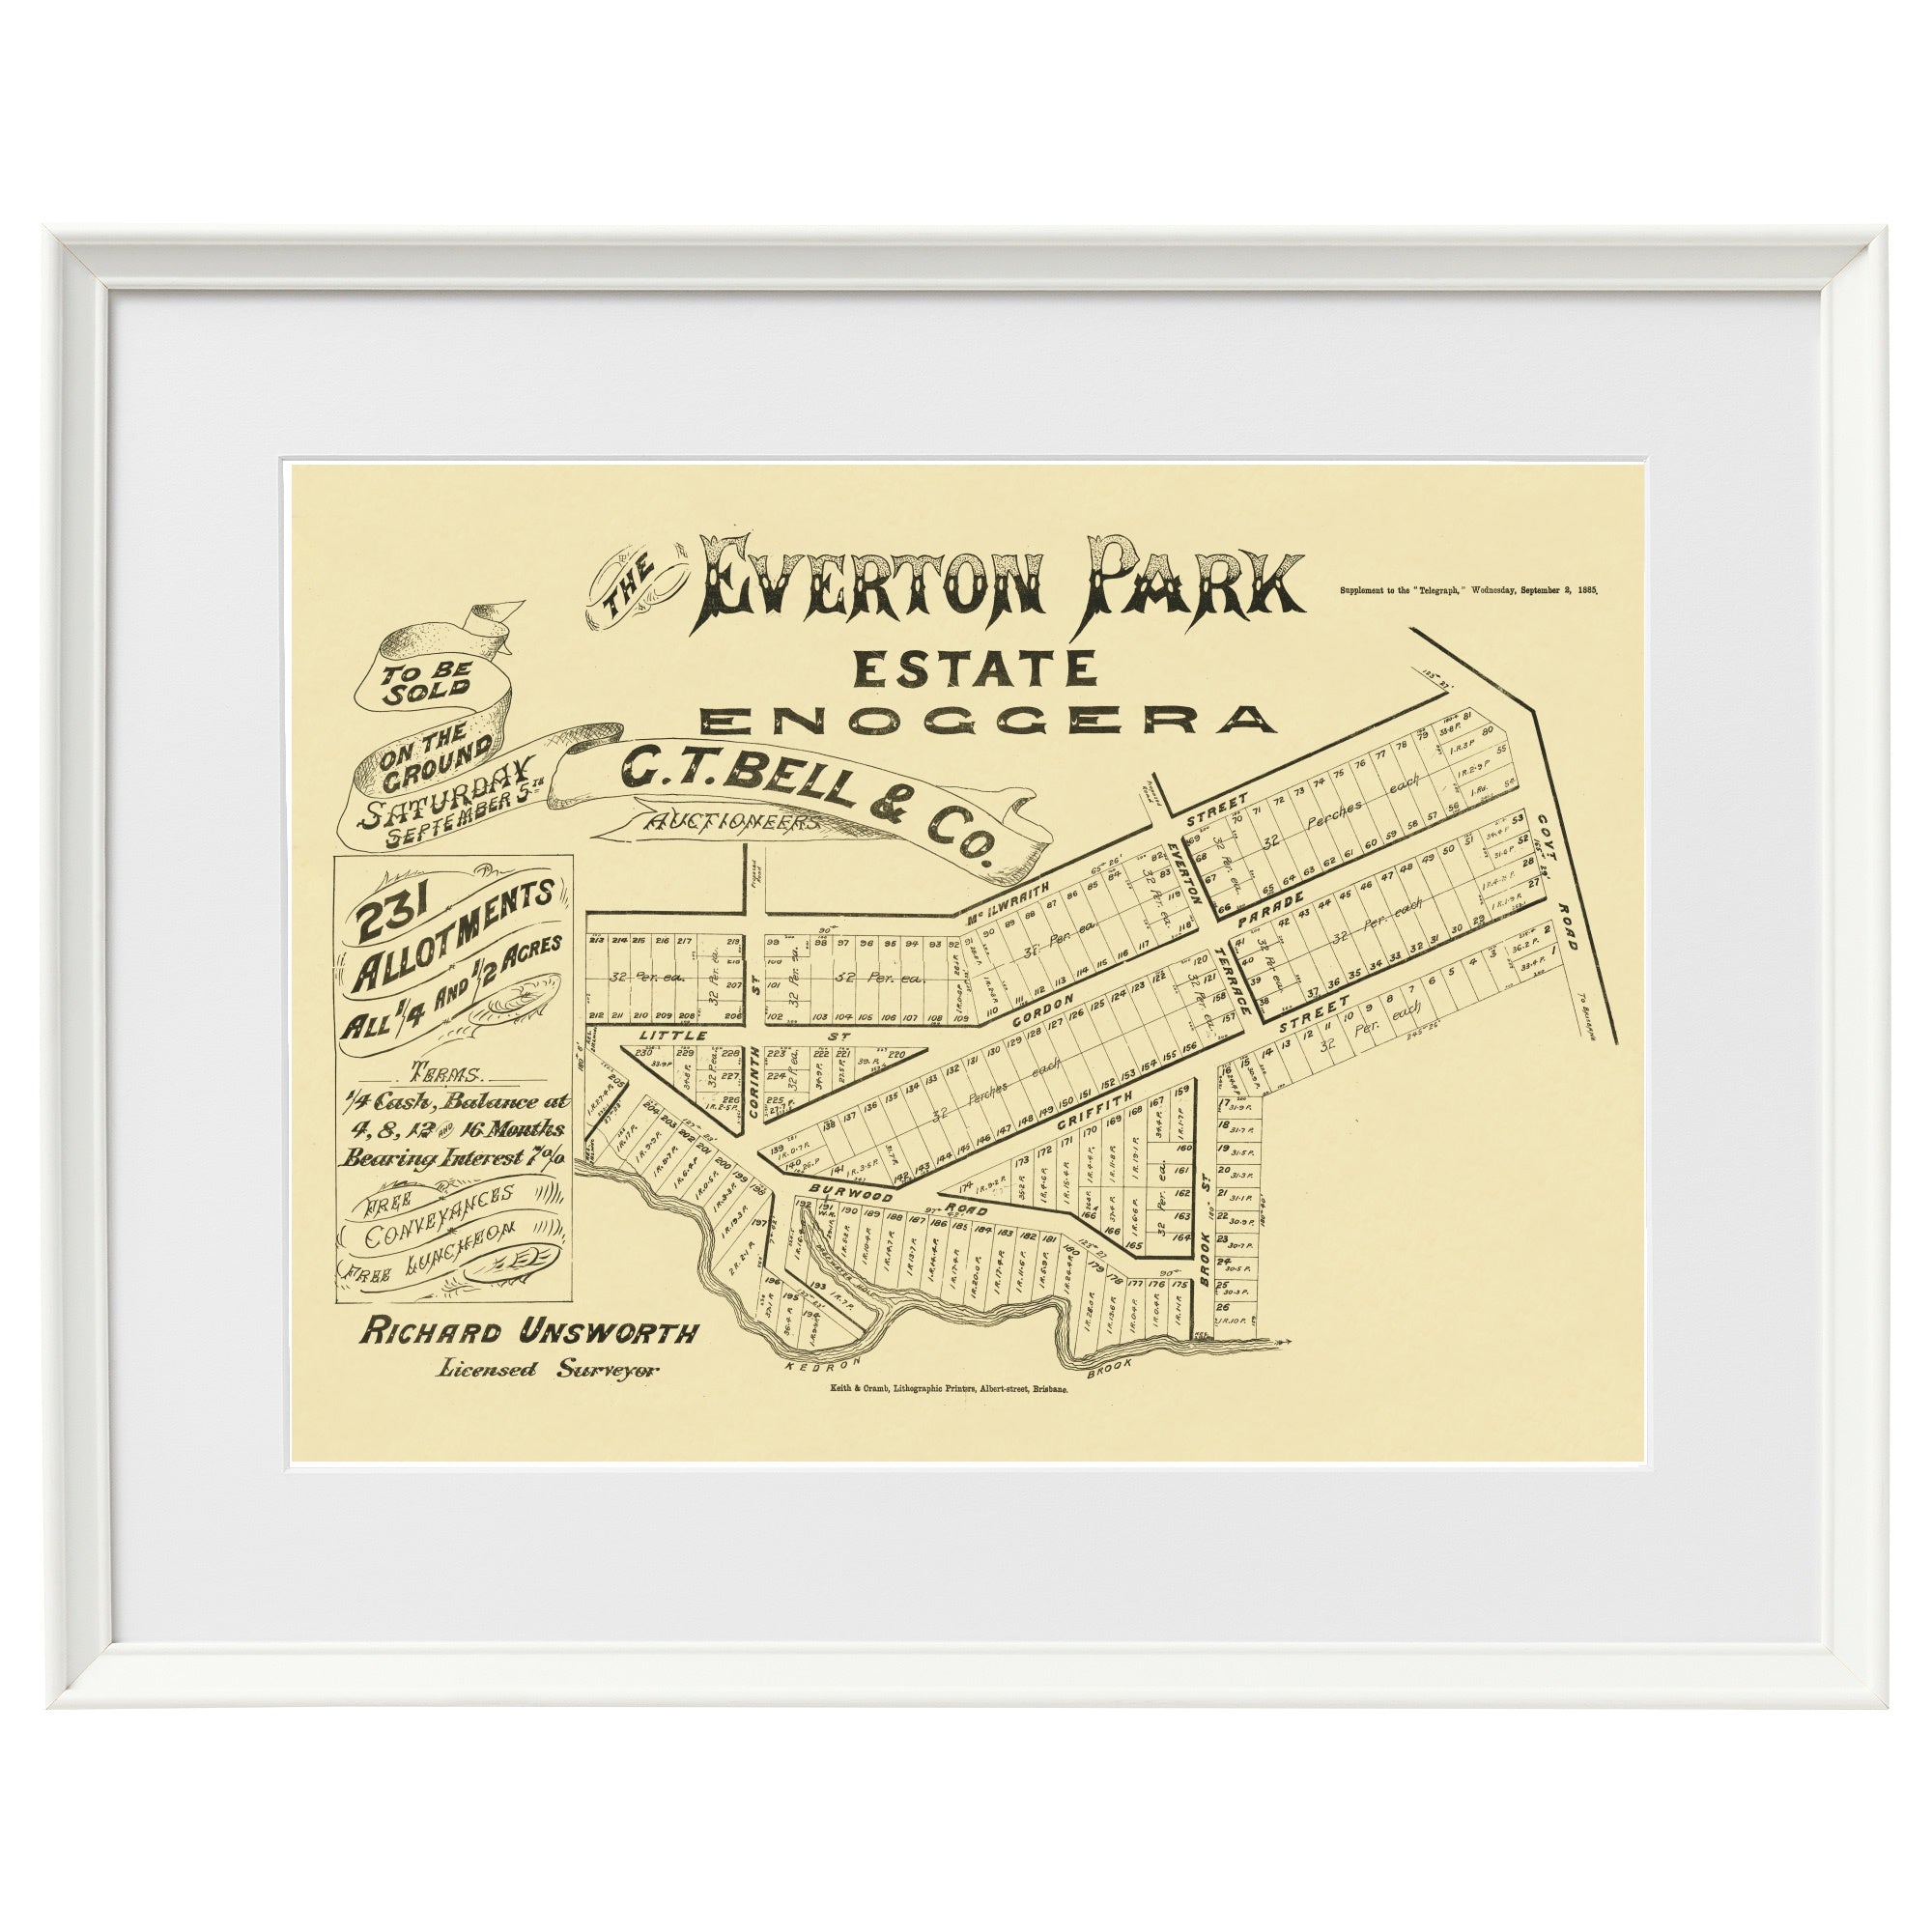 1885 Everton Park - Everton Park Estate